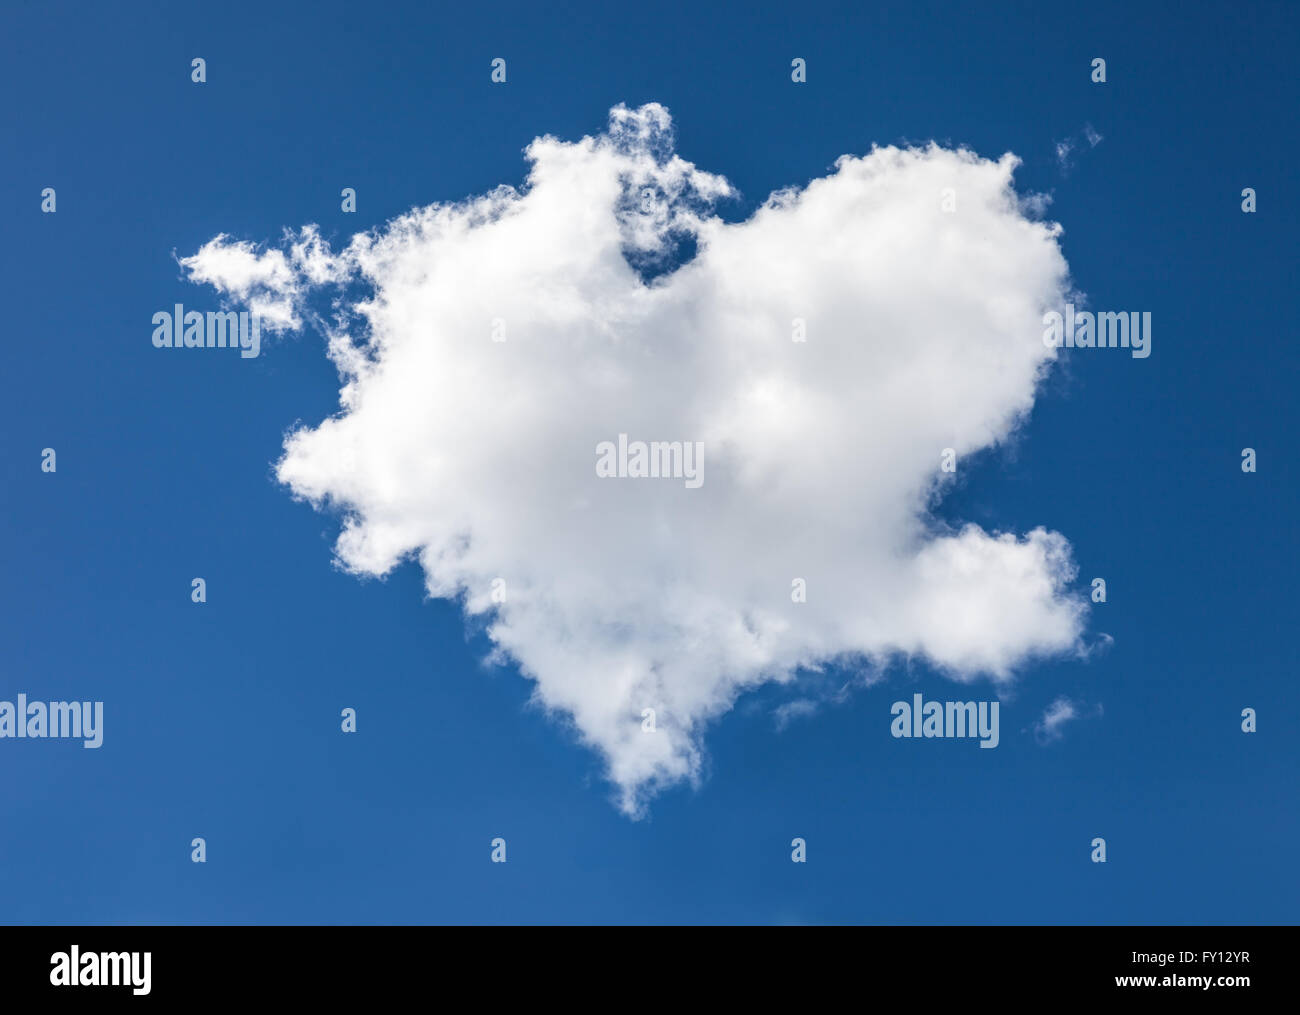 Cloud in heart shape in front of blue sky Stock Photo